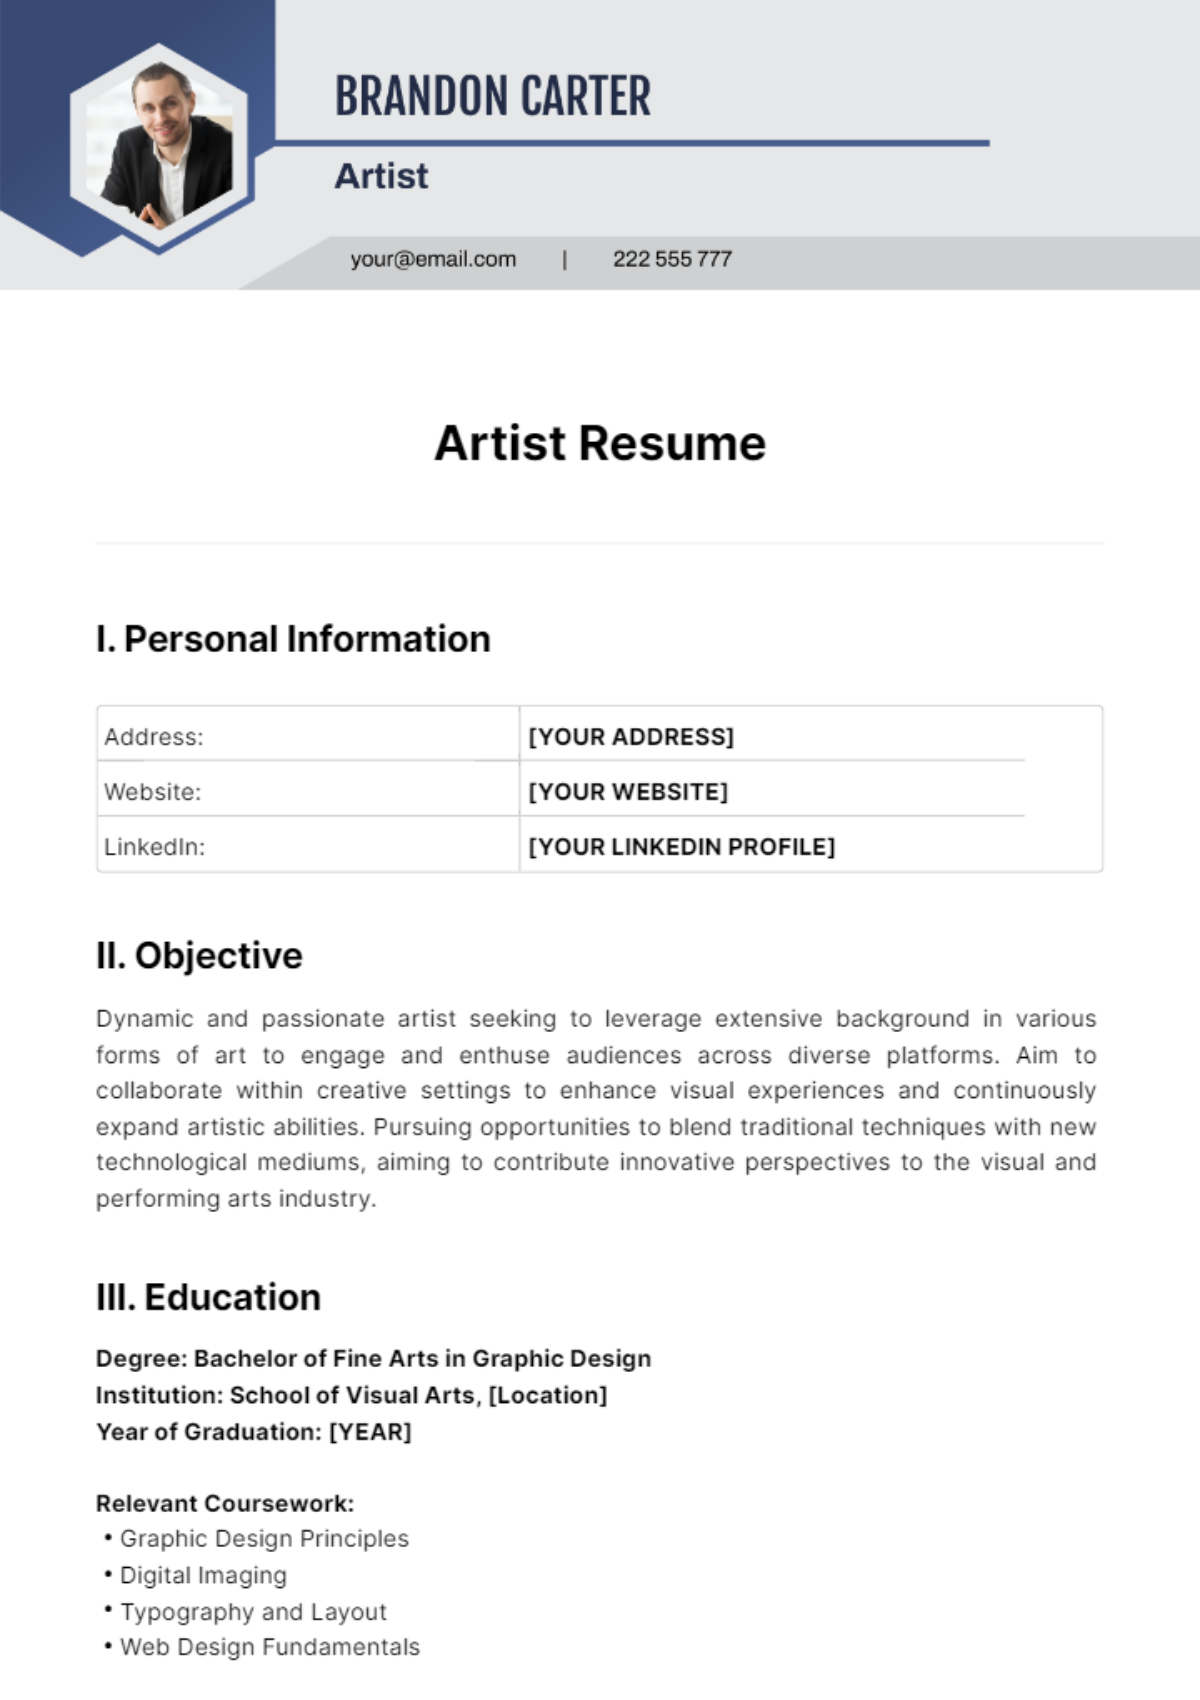 Artist Resume Template